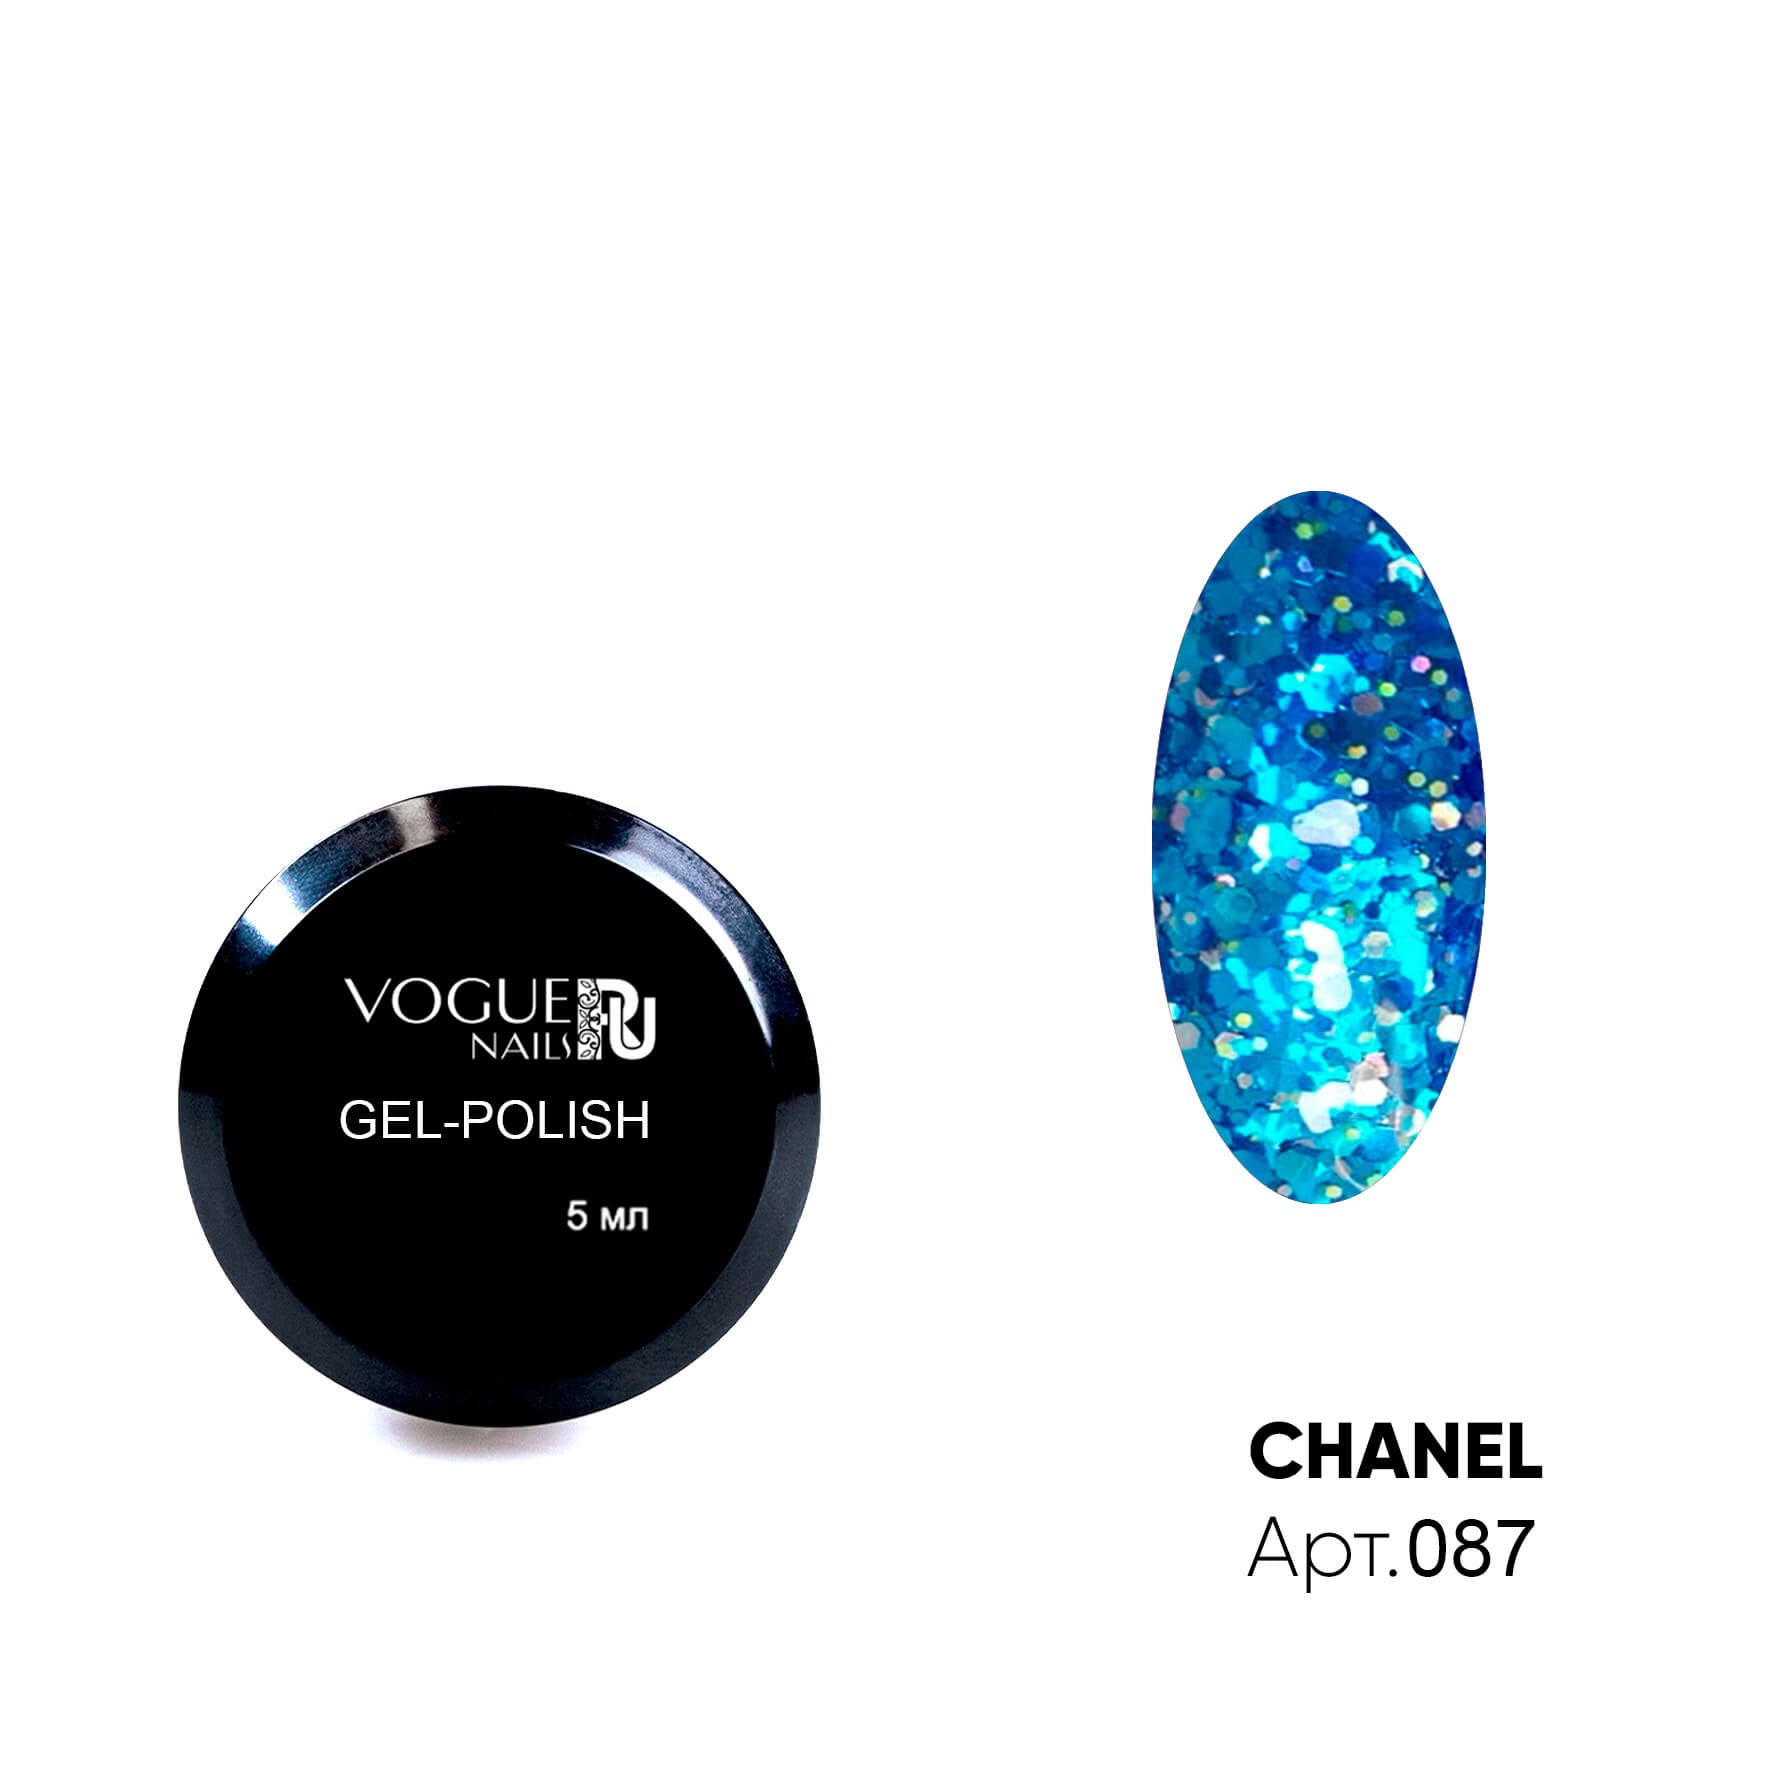 Vogue Nails "High Fashion Week" Gel Glitter - #1